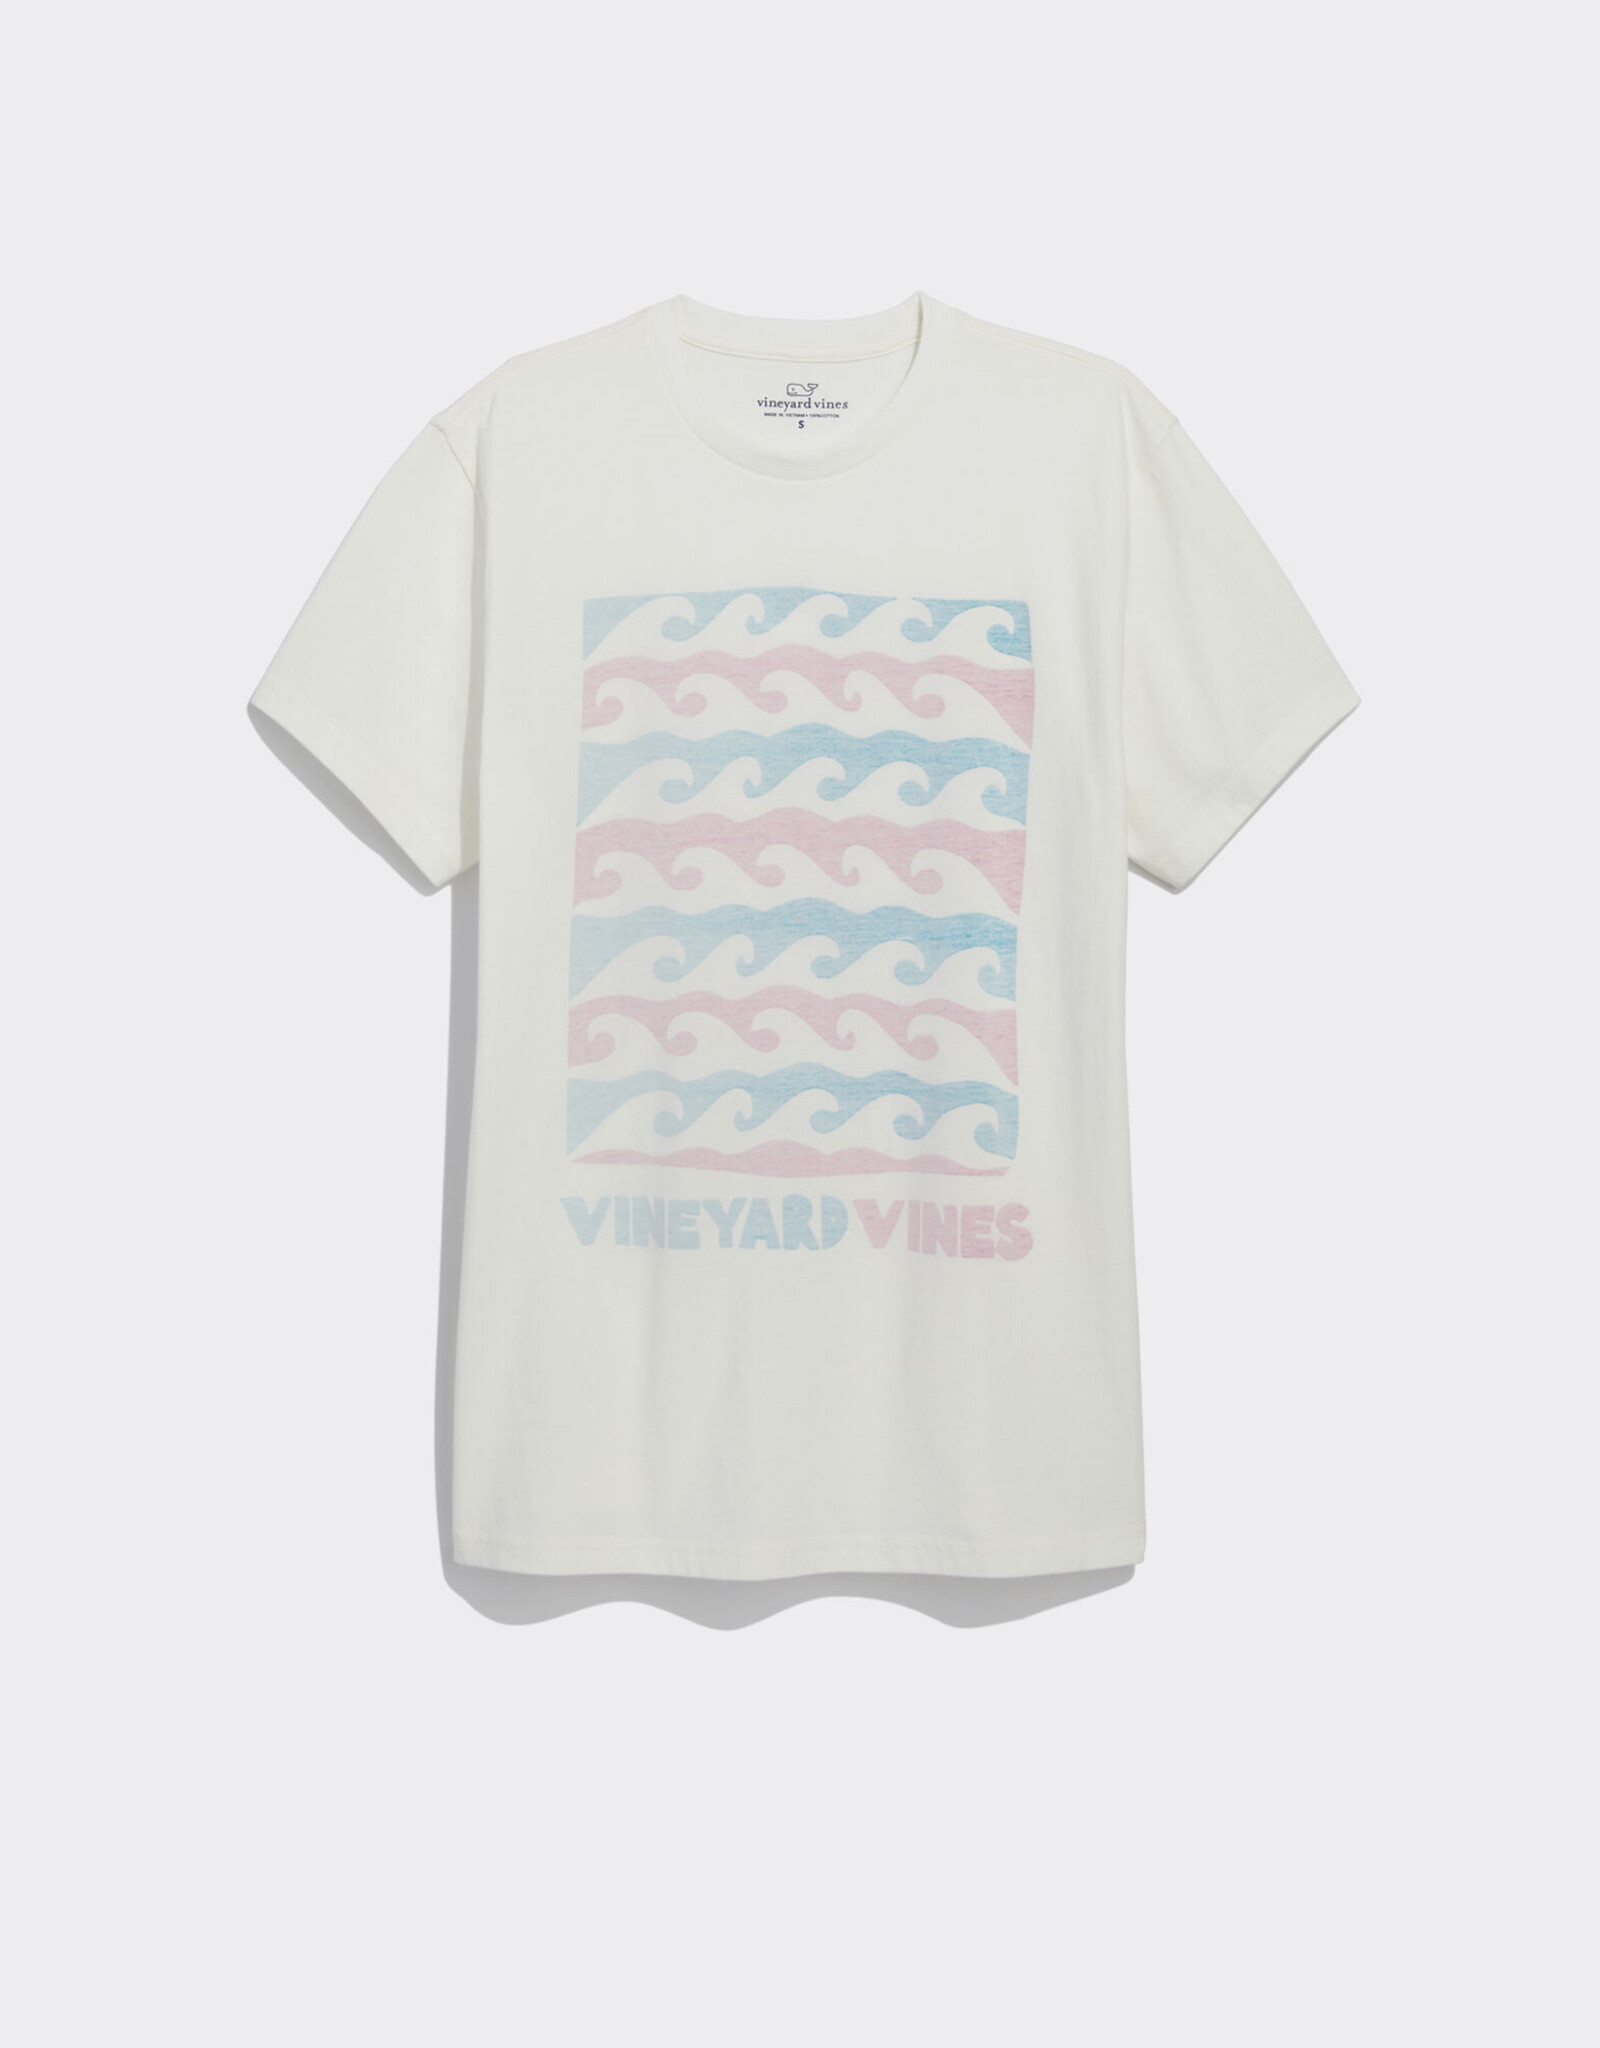 Vineyard Vines Women's Printed Waves Vintage Tee Large / Marshmallow